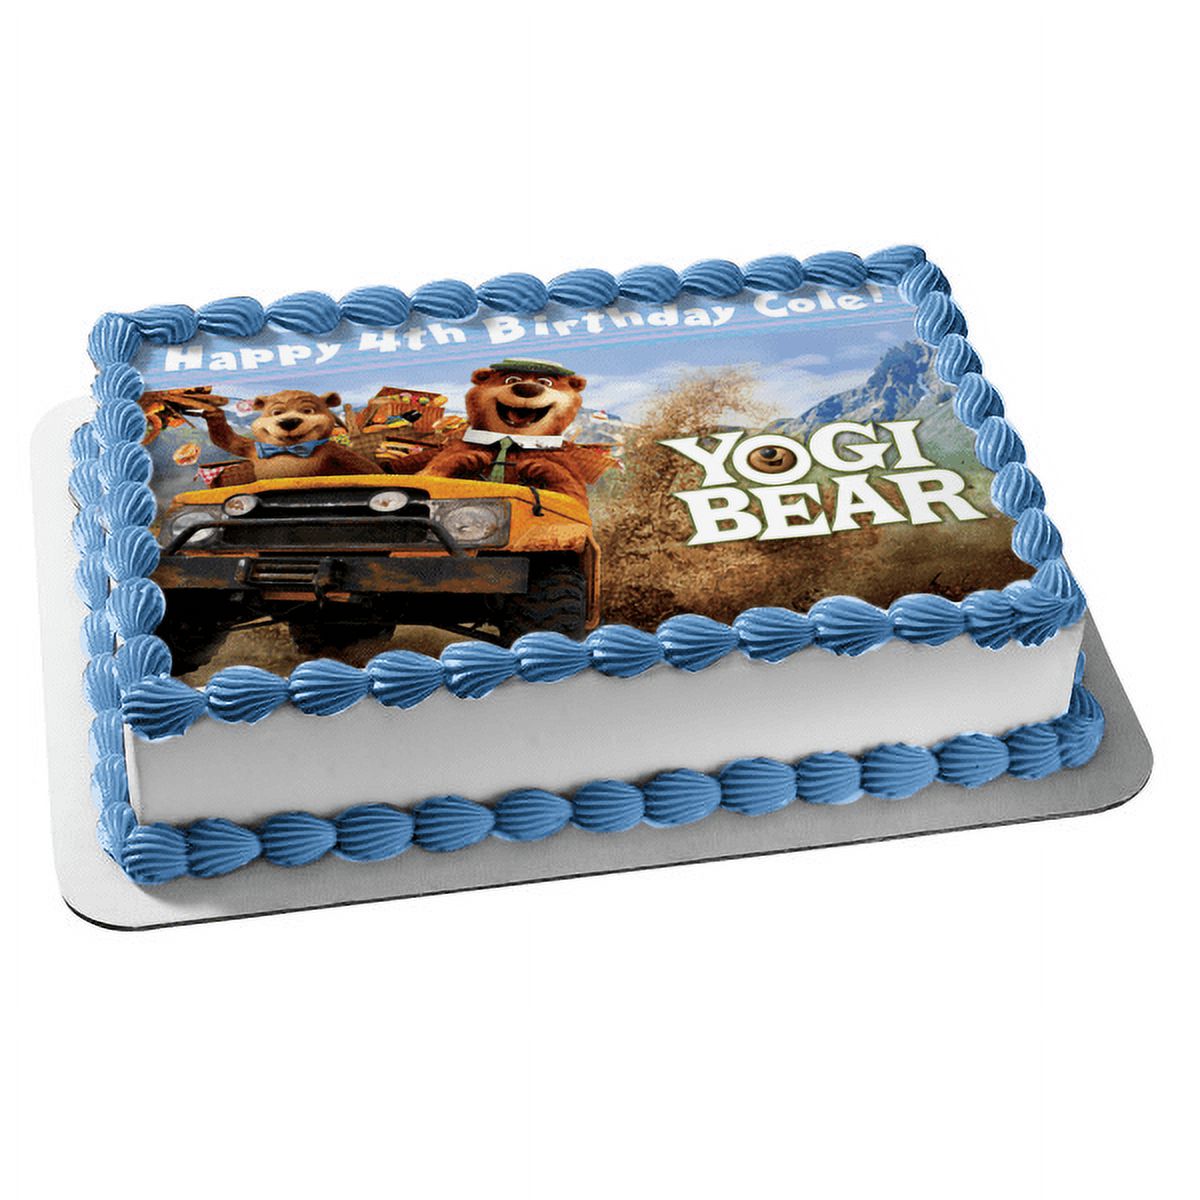 Yogi Bear Movie Boo Boo Jellystone Park Edible Cake Topper Image ABPID54650 - image 1 of 3